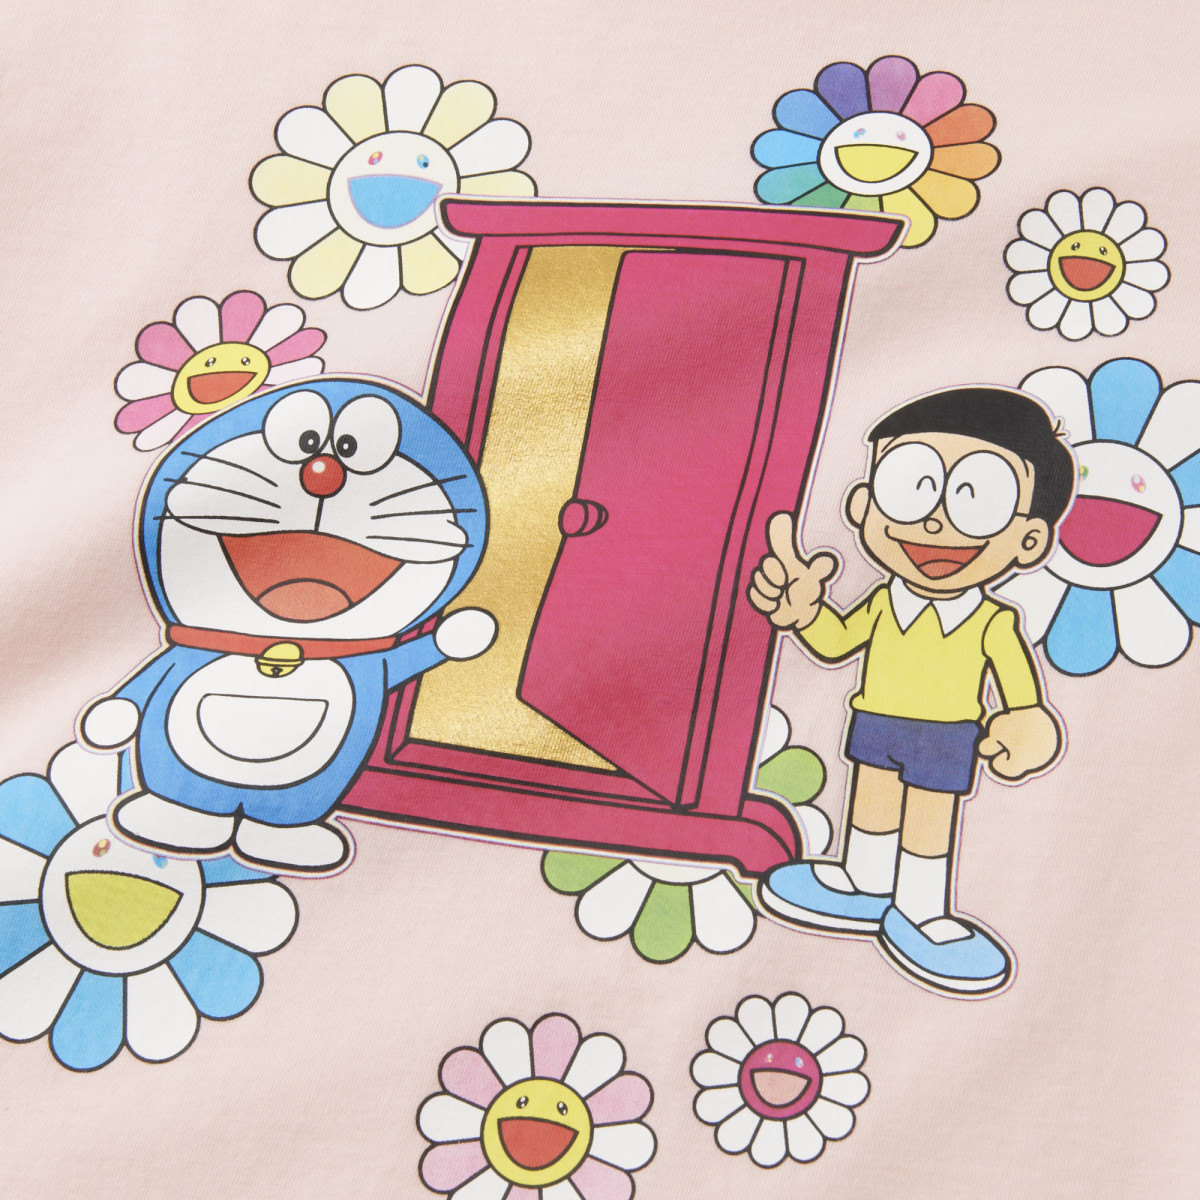 Uniqlo's "UT Doraemon" T-shirt in collaboration with Takashi Murakami. Photo: Uniqlo